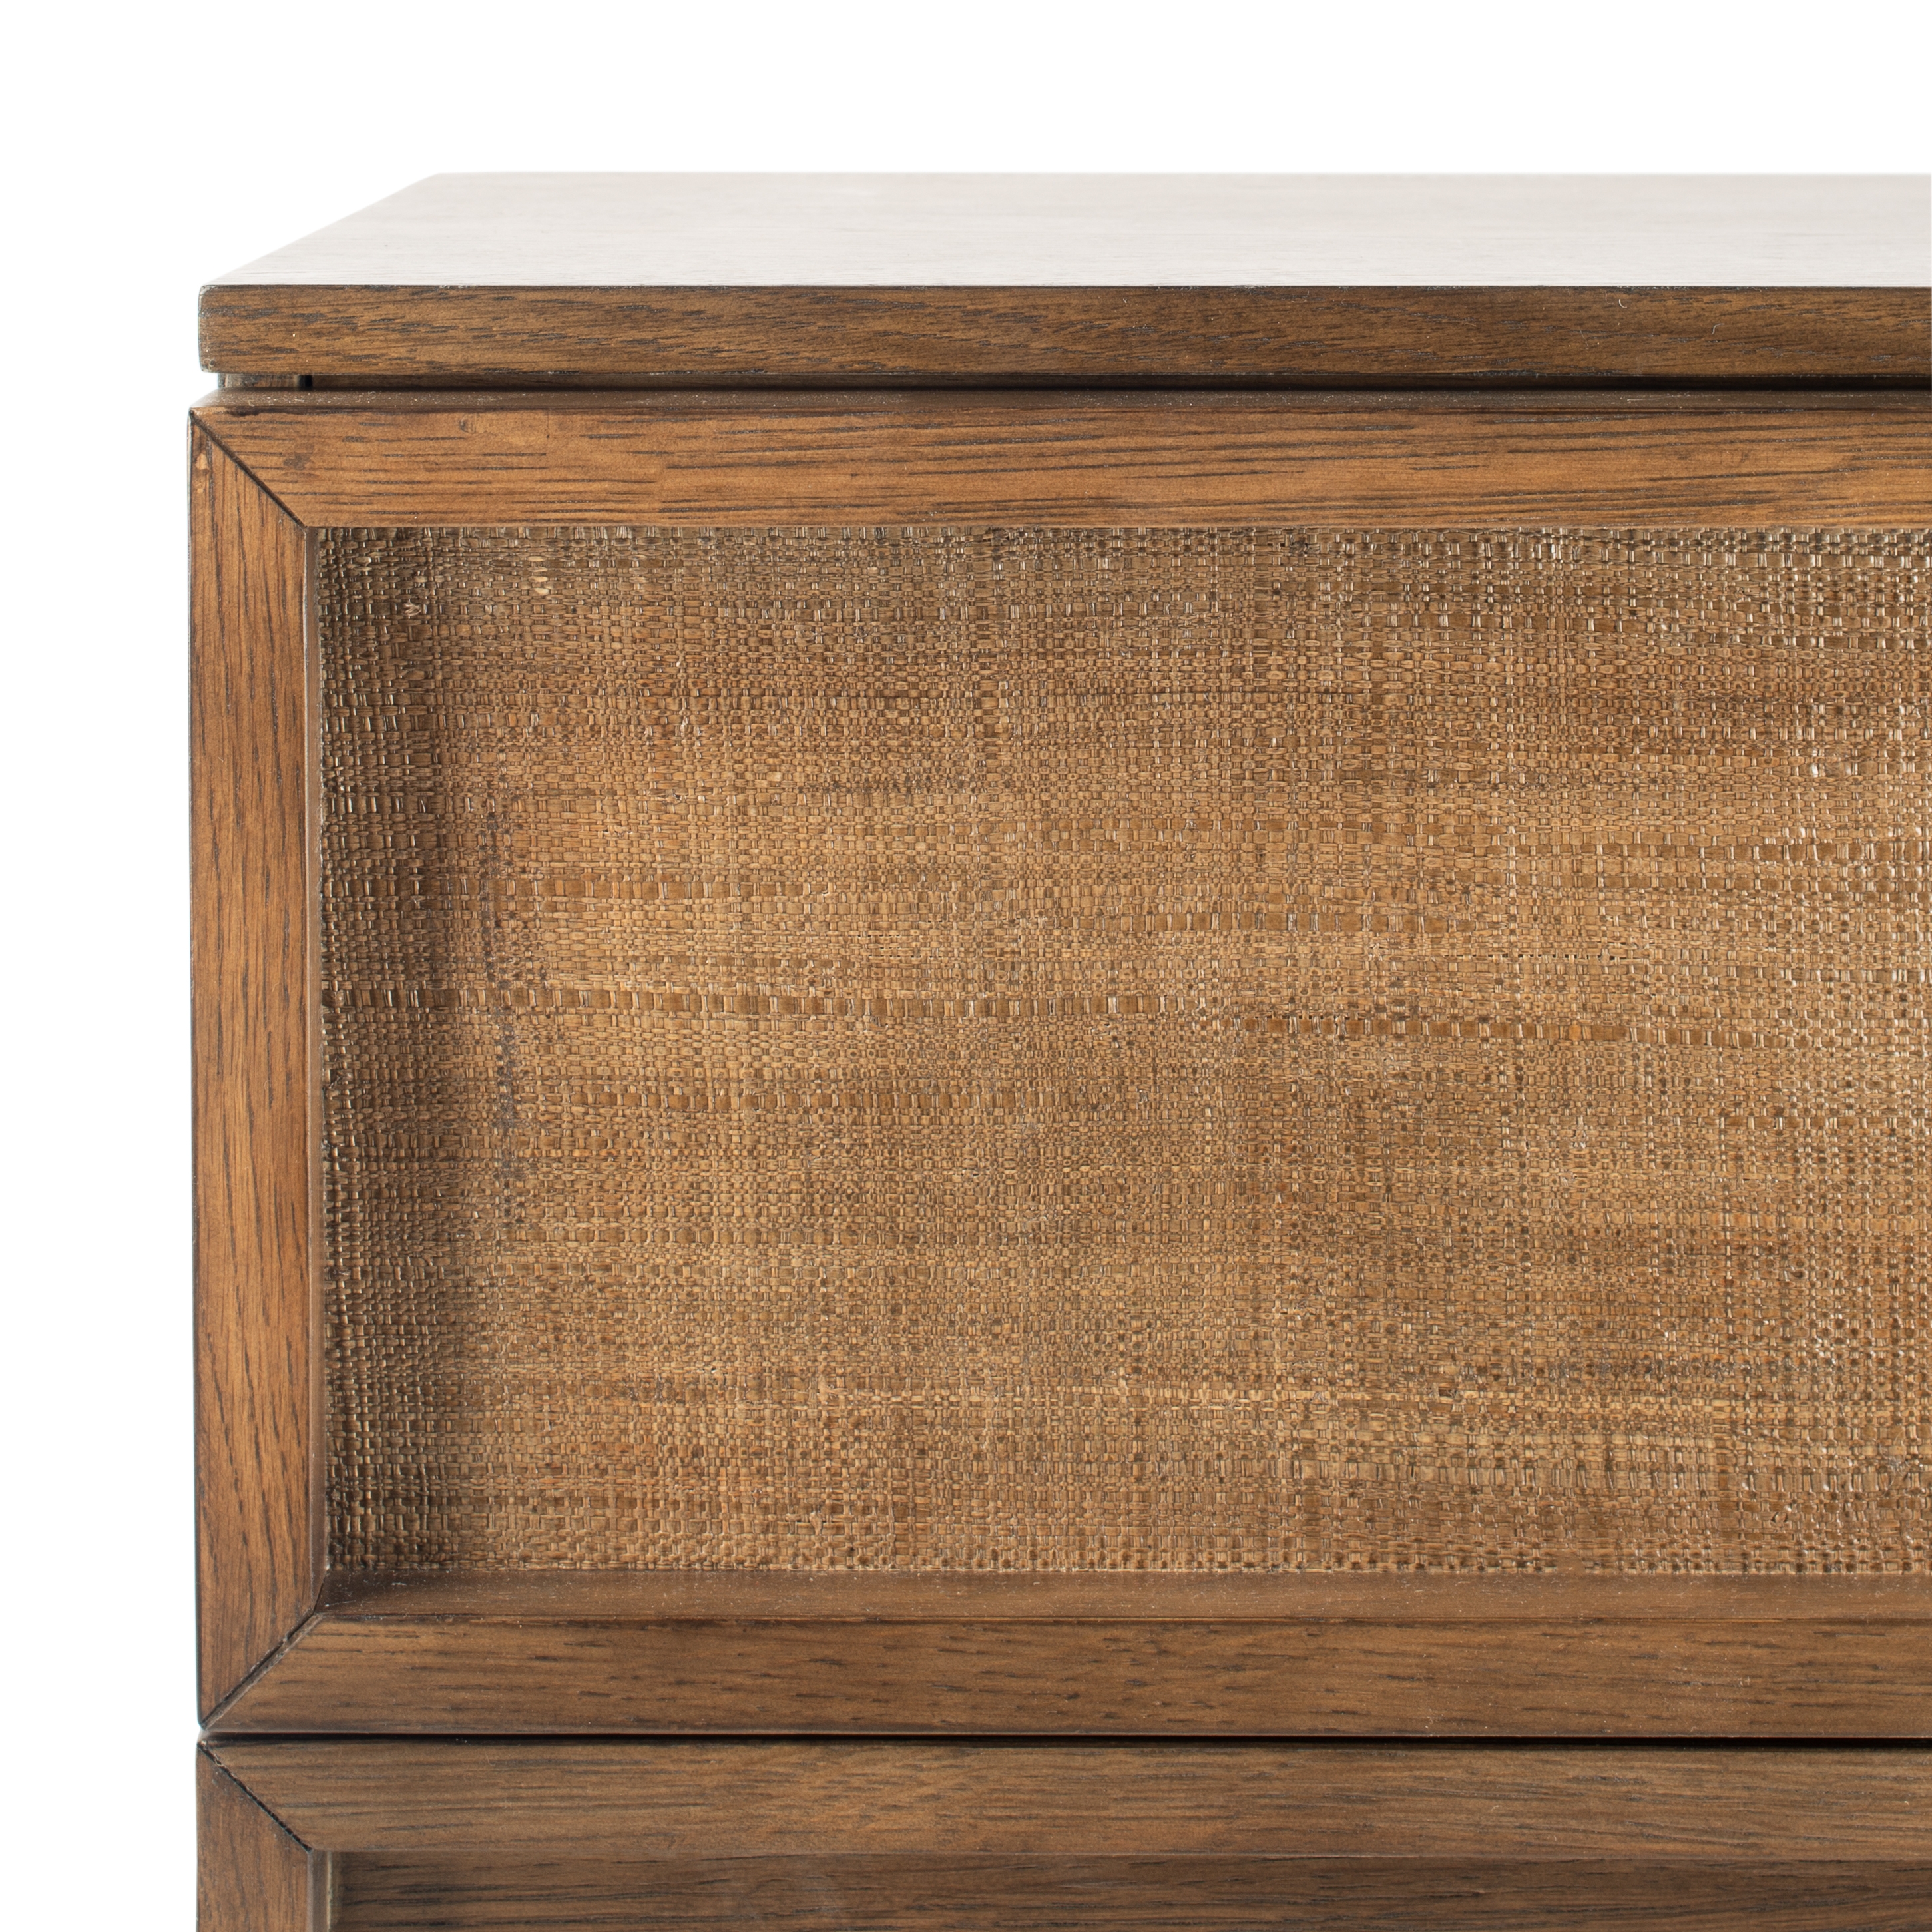 Varuna 6-Drawer Wood Dresser, Brown - Image 2